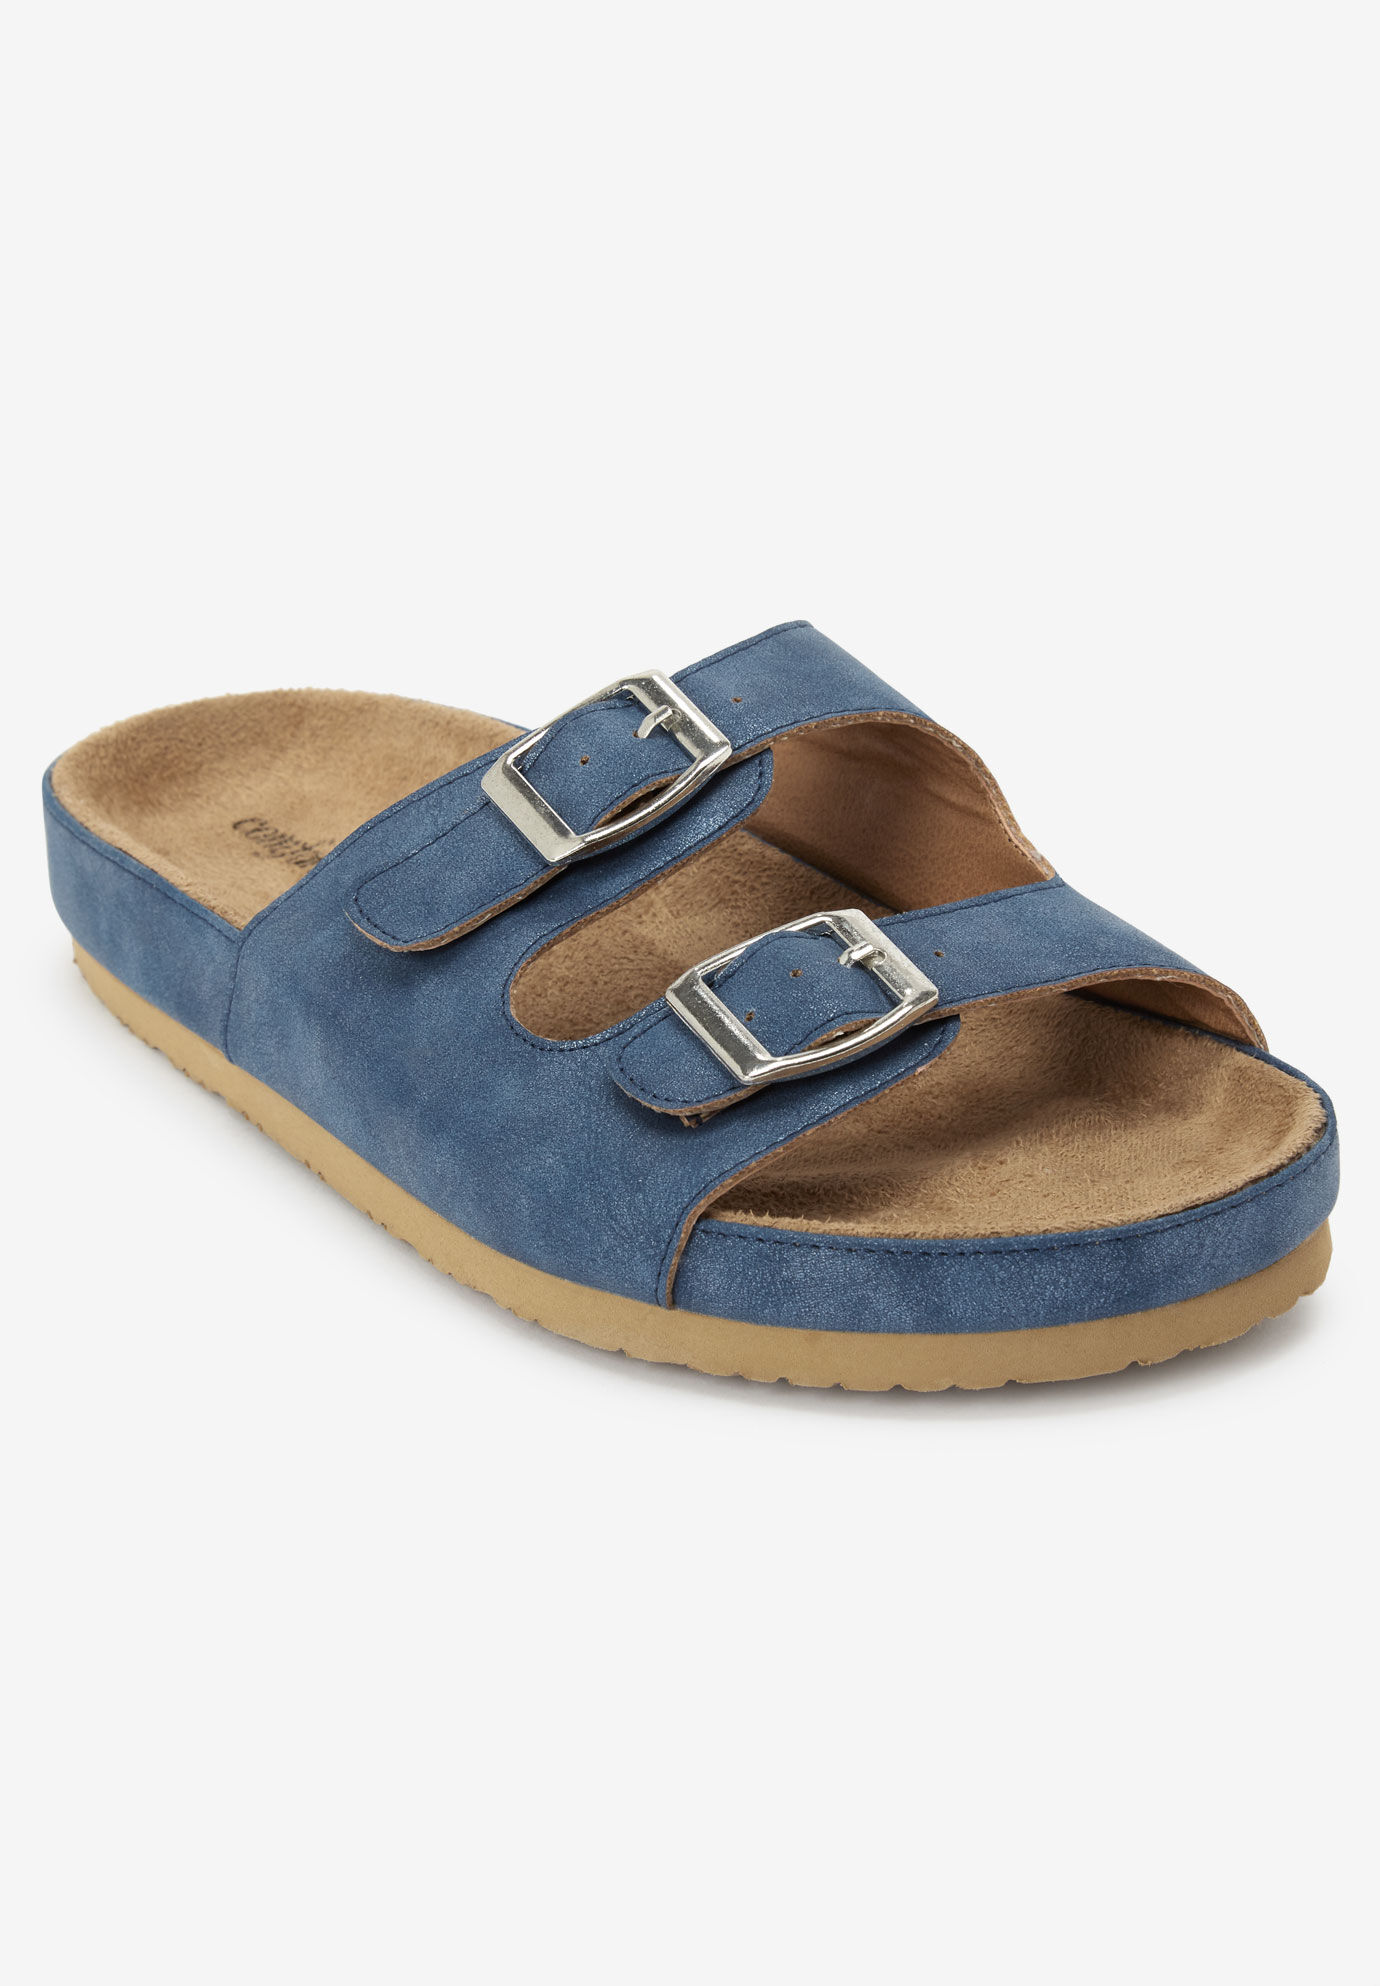 wide width slip on sandals